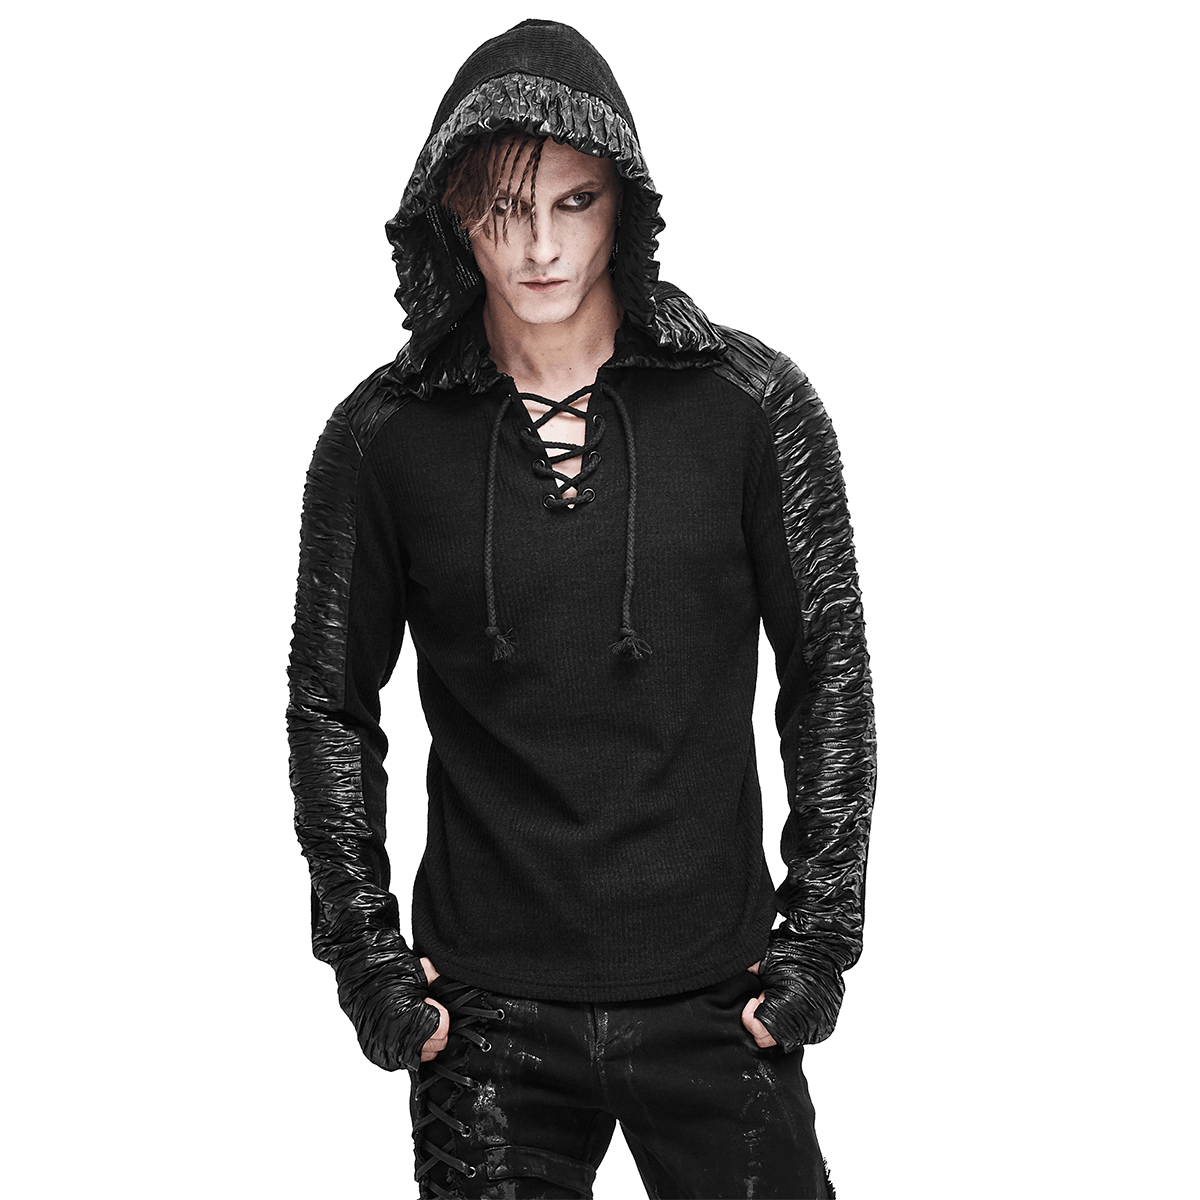 Black Hoodie with Lacing for Men / Long Sleeves Sweatshirt with Leatherette - HARD'N'HEAVY